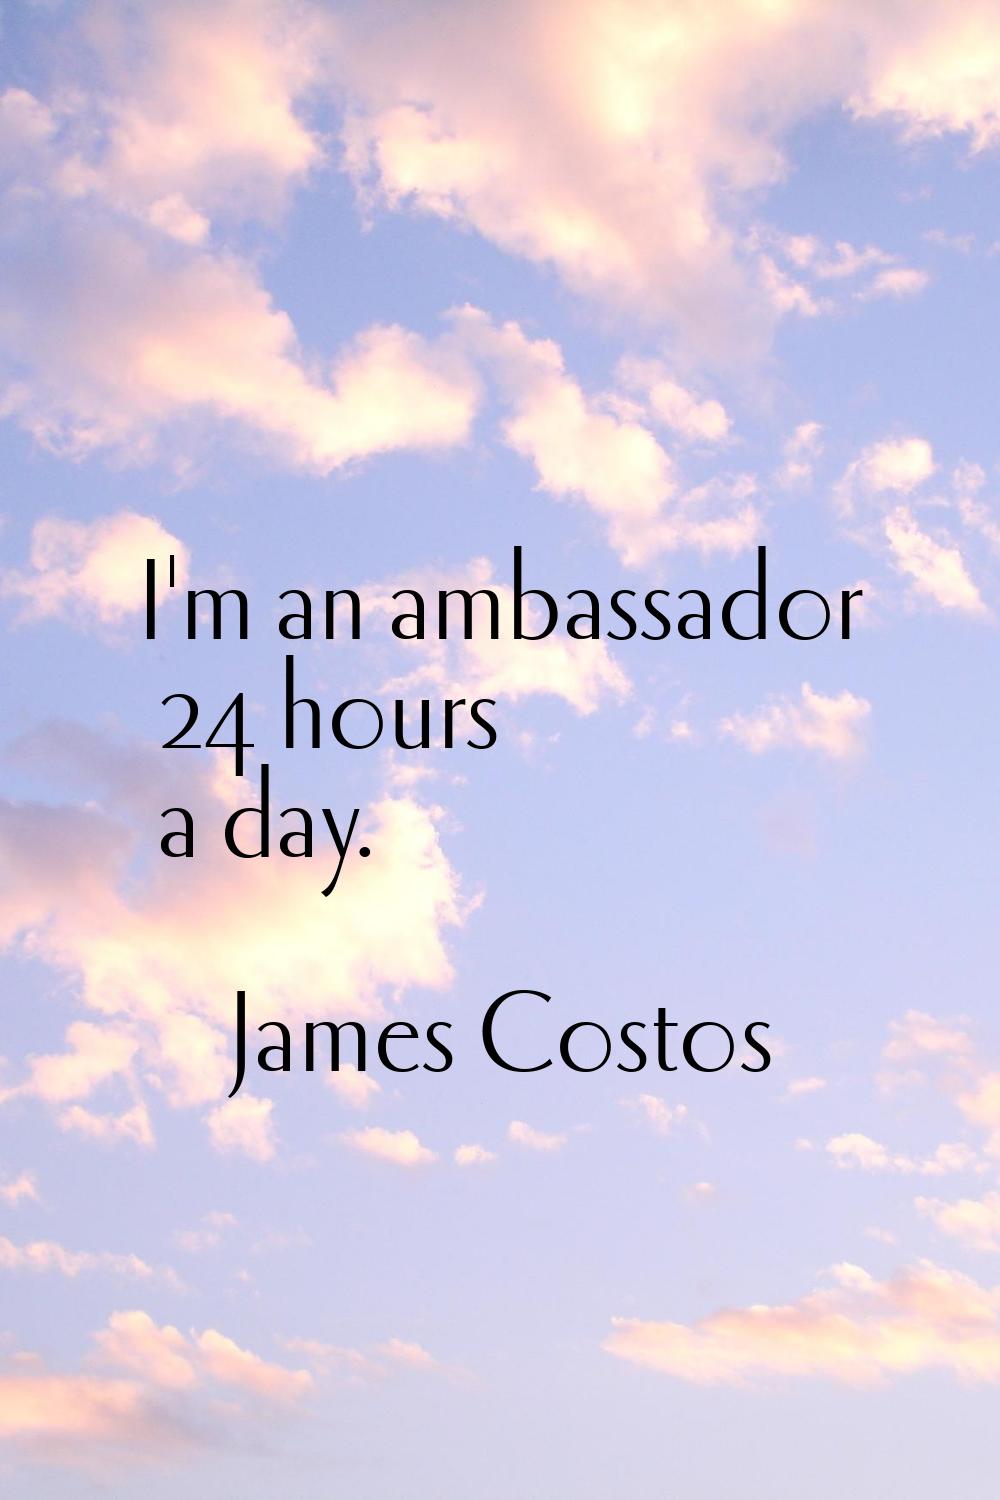 I'm an ambassador 24 hours a day.